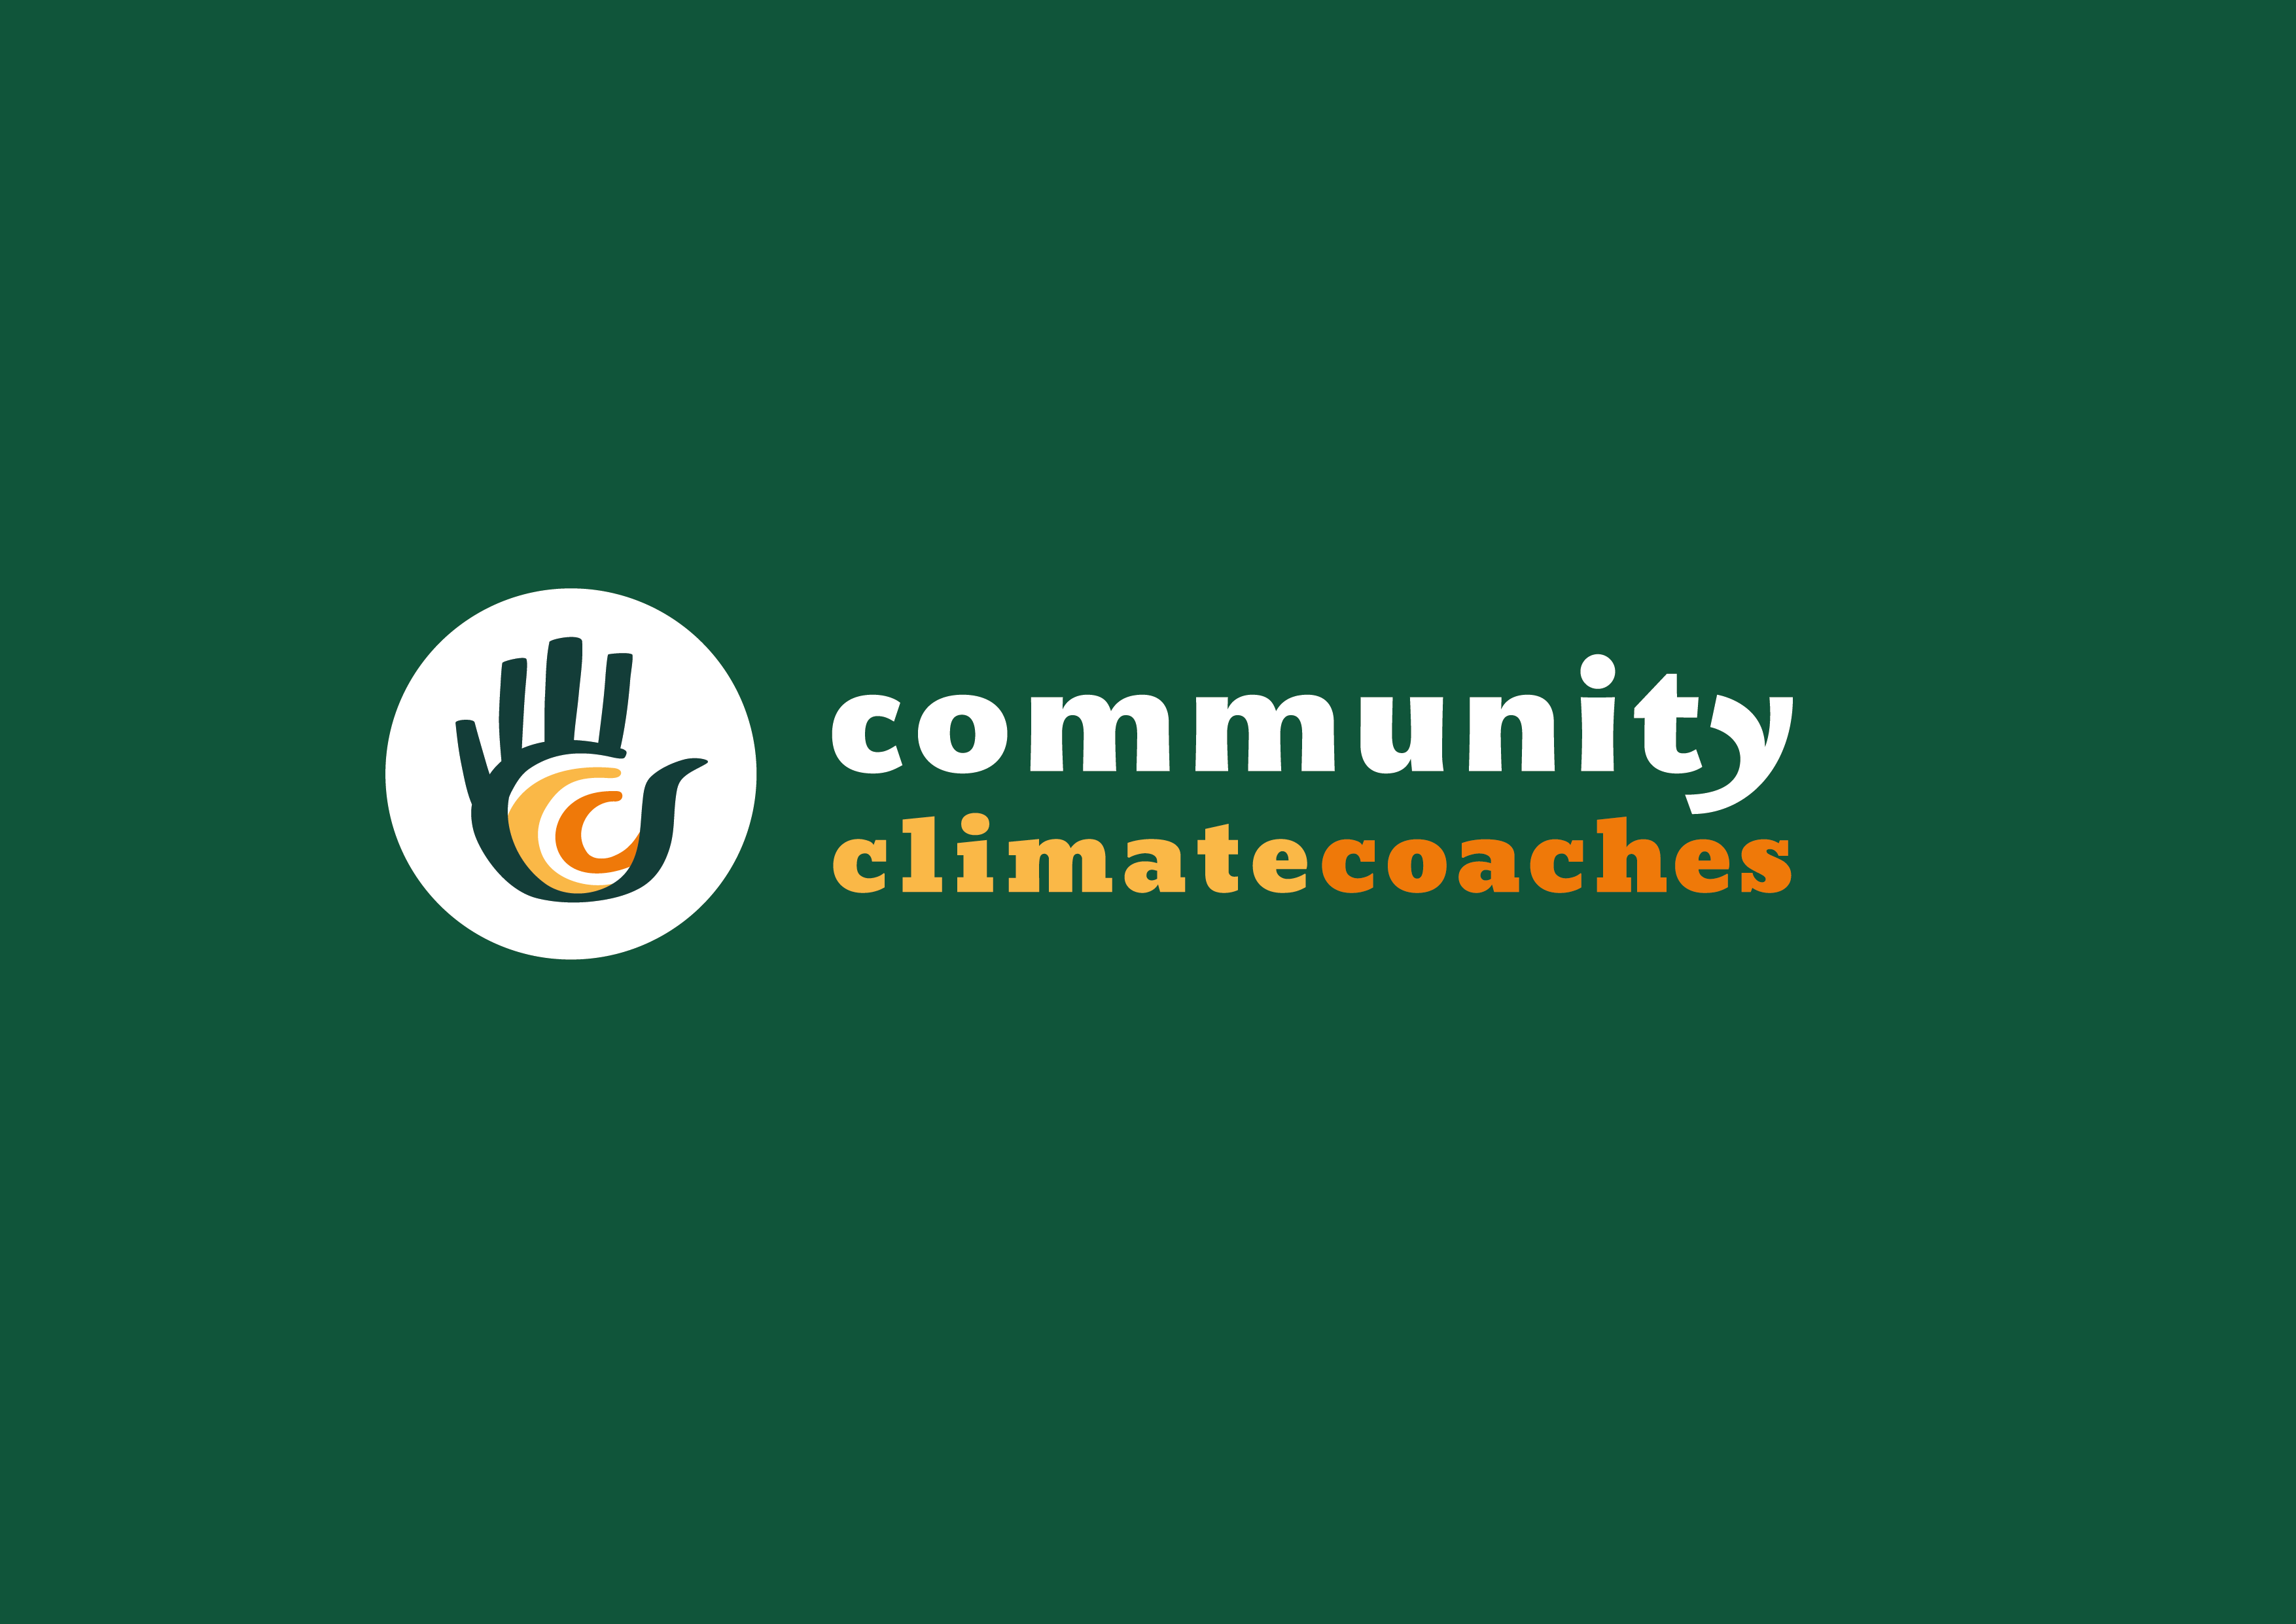 CCC logo green